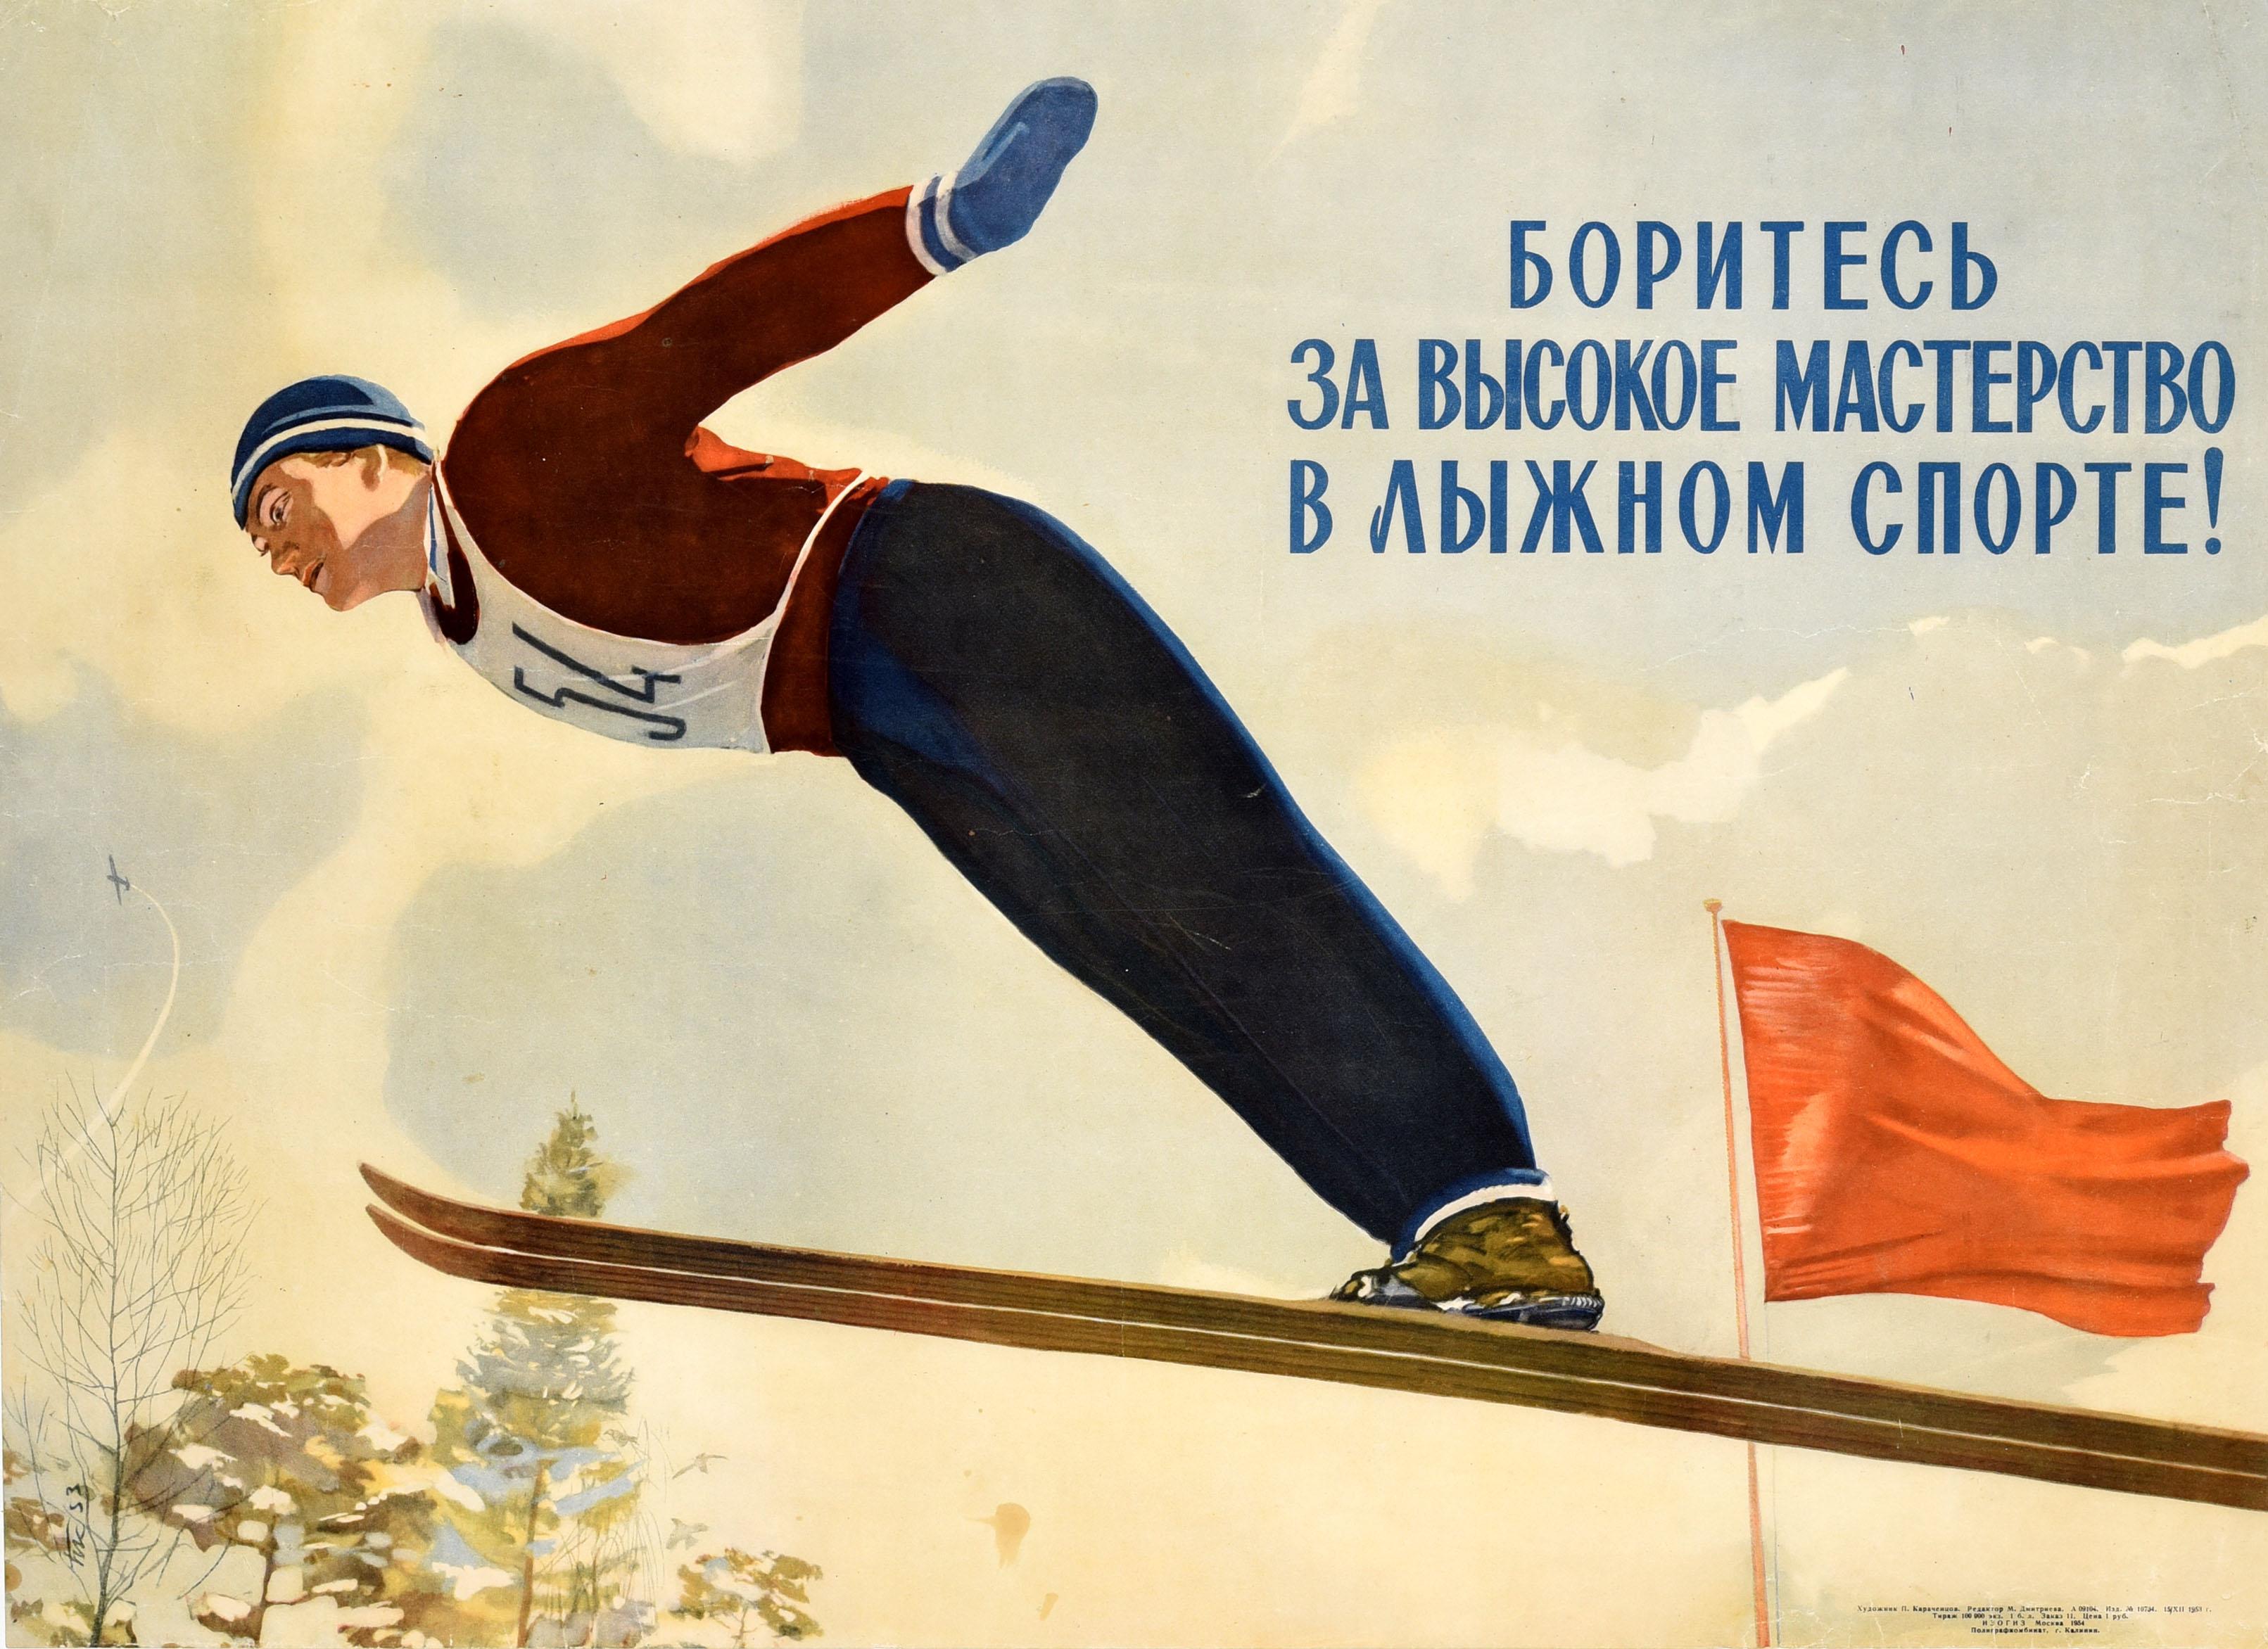 Unknown Print - Original Vintage Soviet Sport Poster Skiing Skills Winter Sports USSR Midcentury